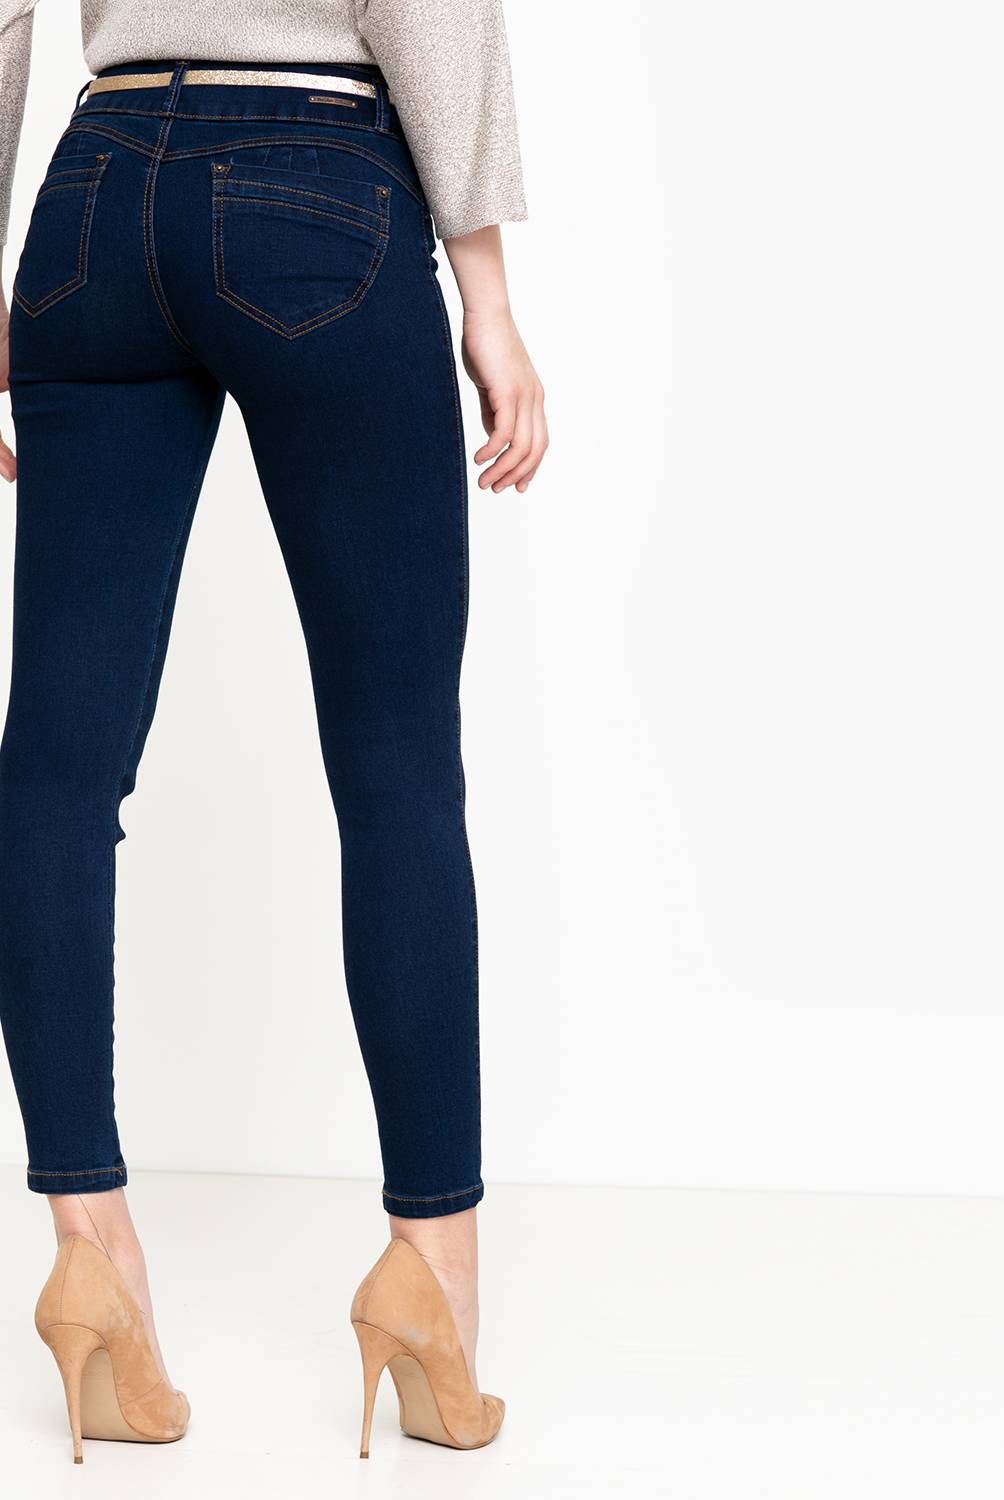 MOSSIMO - Jeans Basico